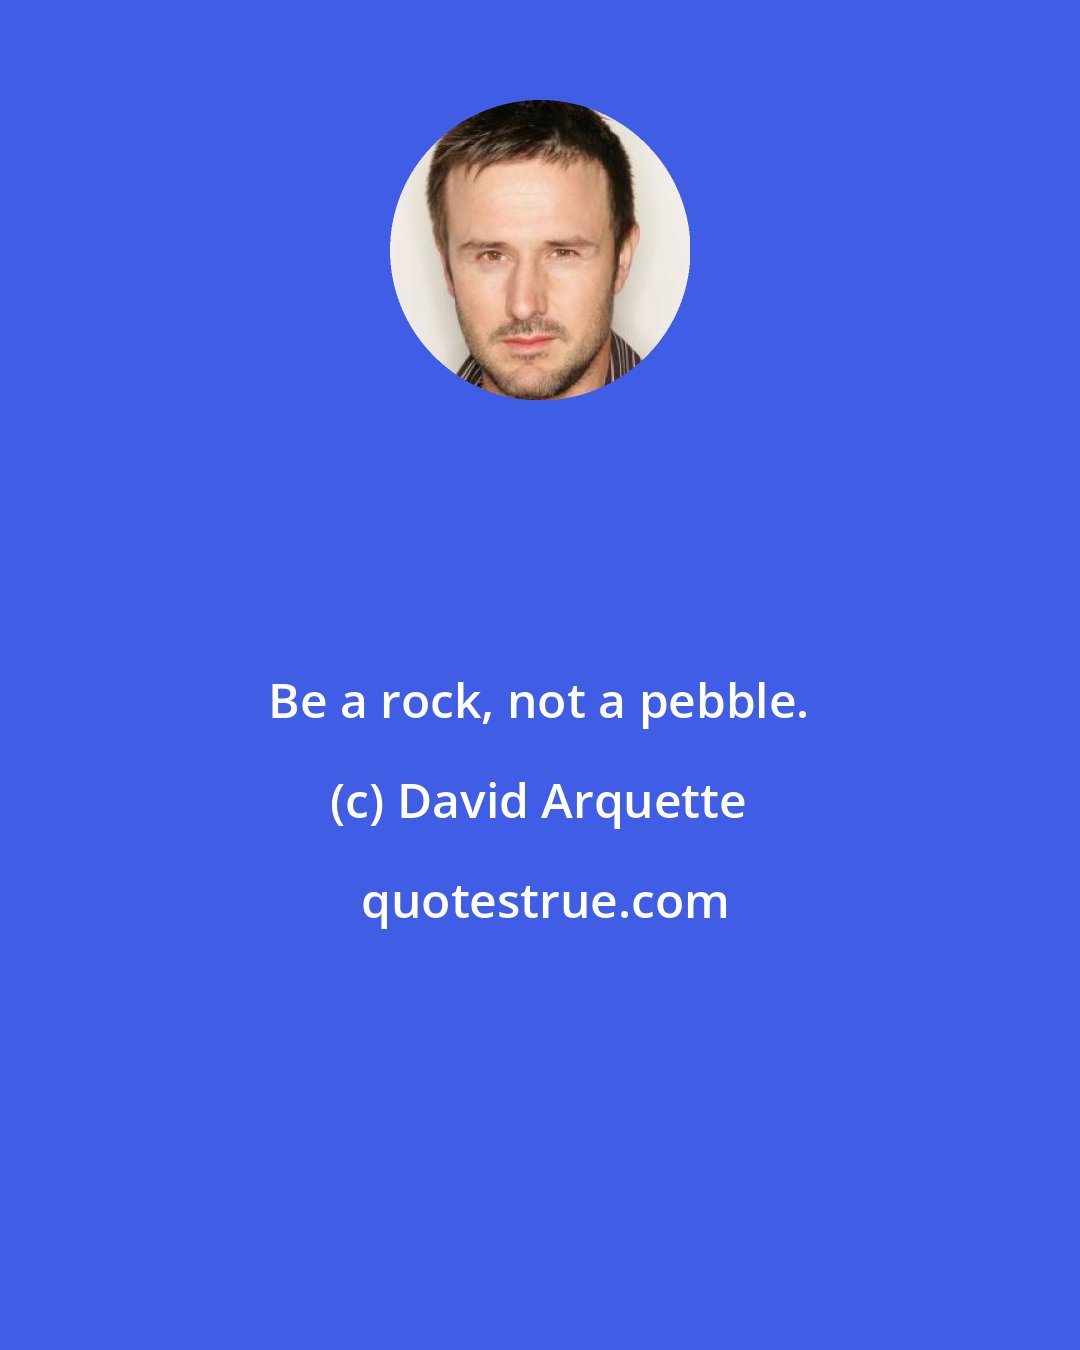 David Arquette: Be a rock, not a pebble.